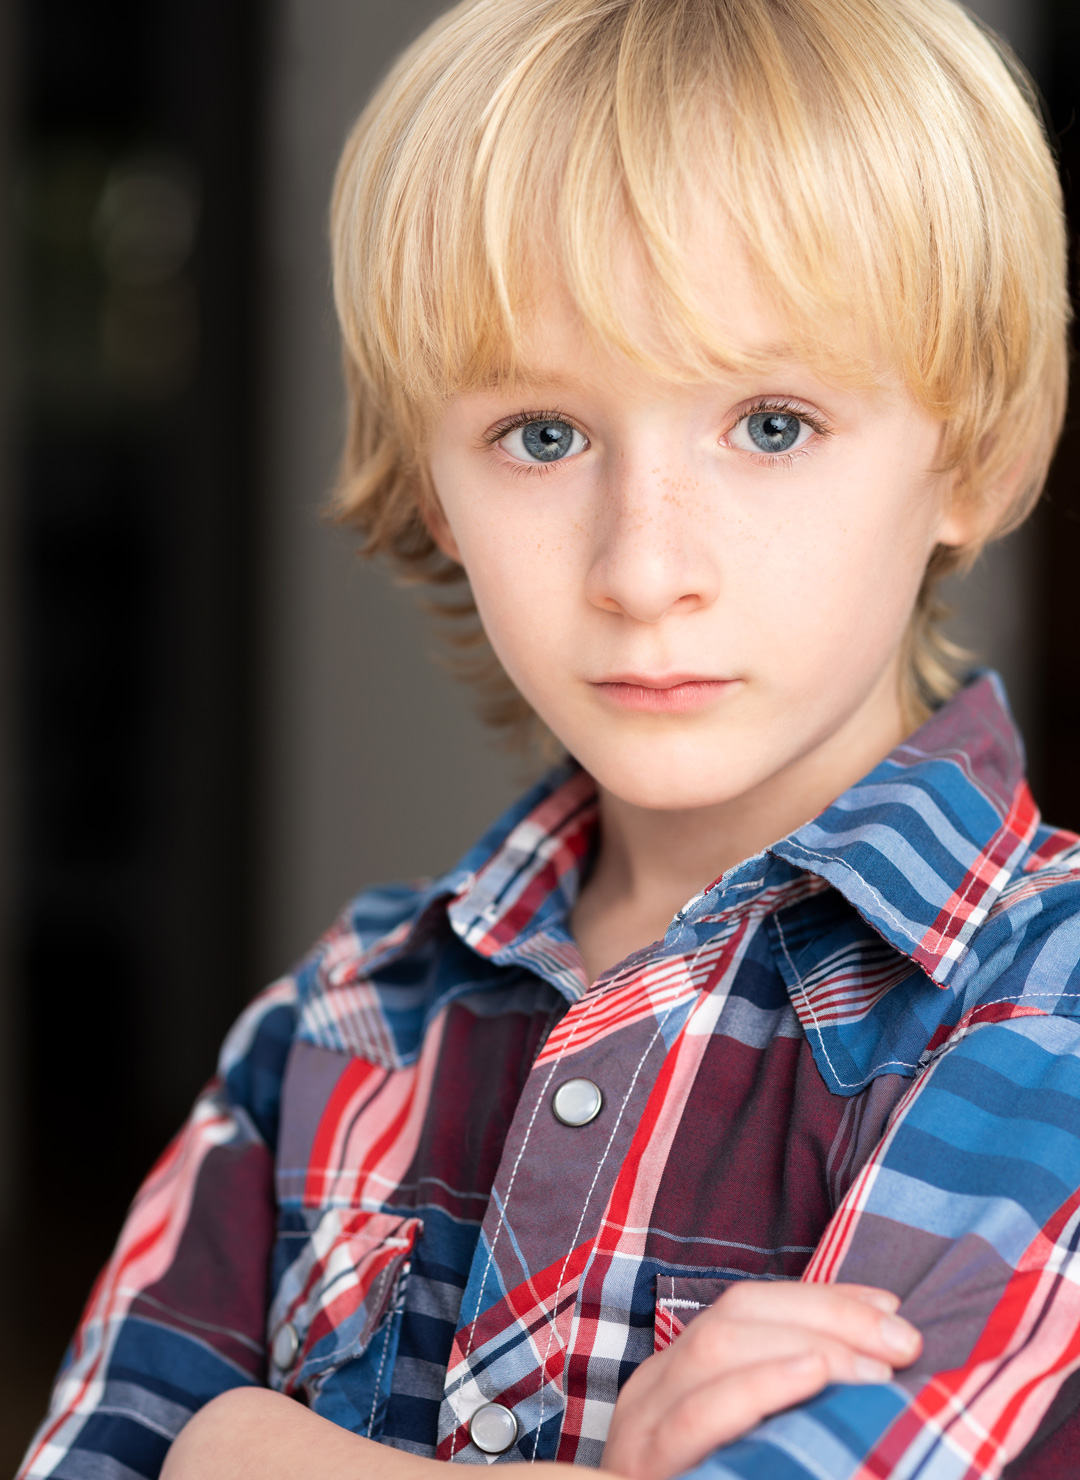 The Good Doctor TV show blonde boy child actor Aias Dallman headshot